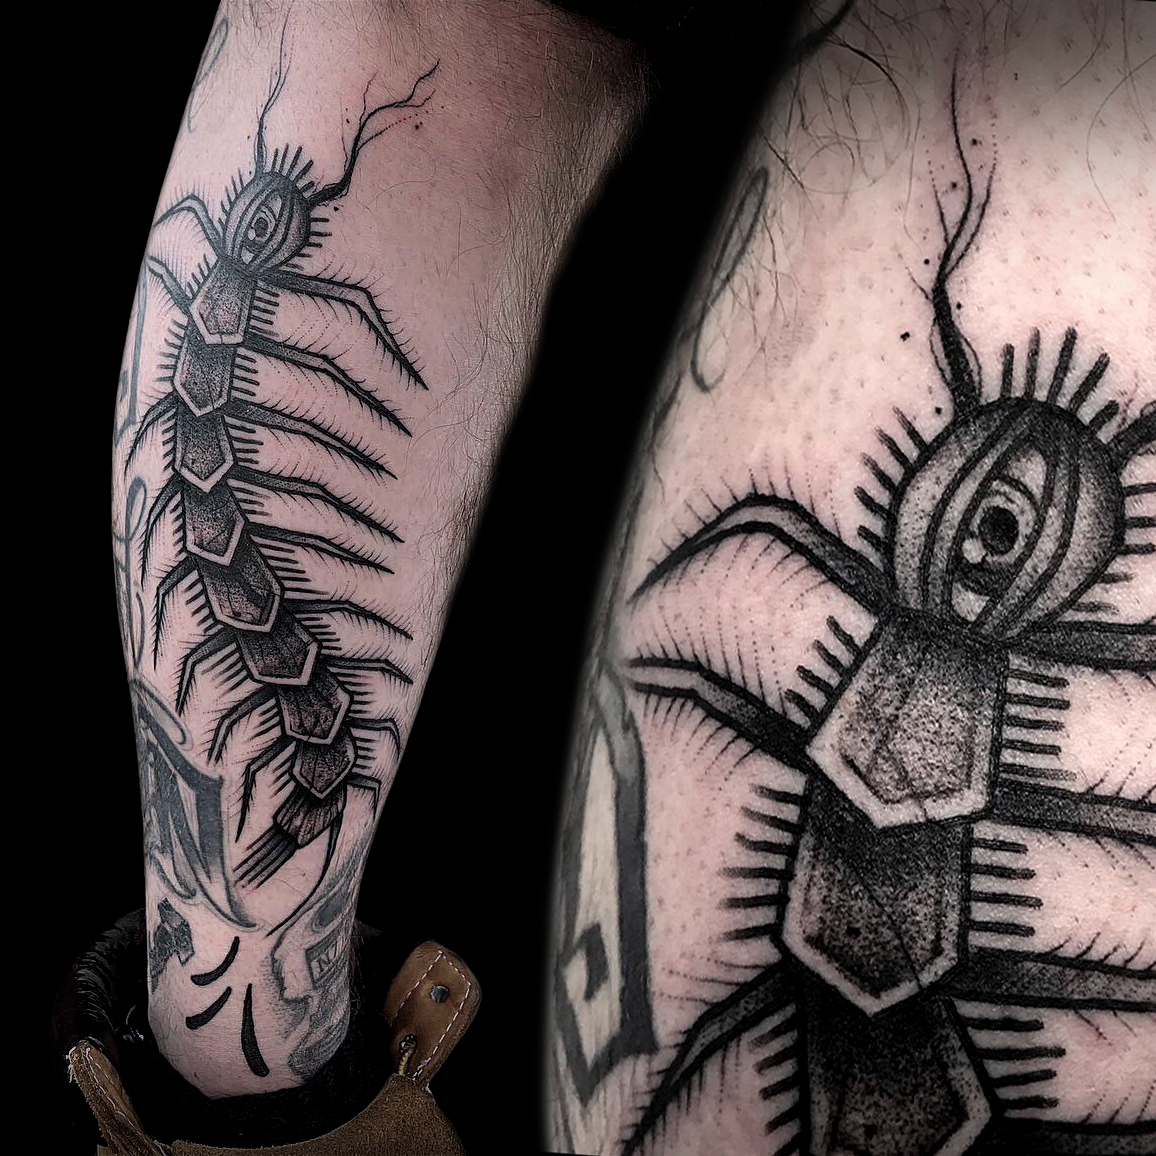 Marco Valotti (SL_ASH) Tattoo Artist in London Reviews